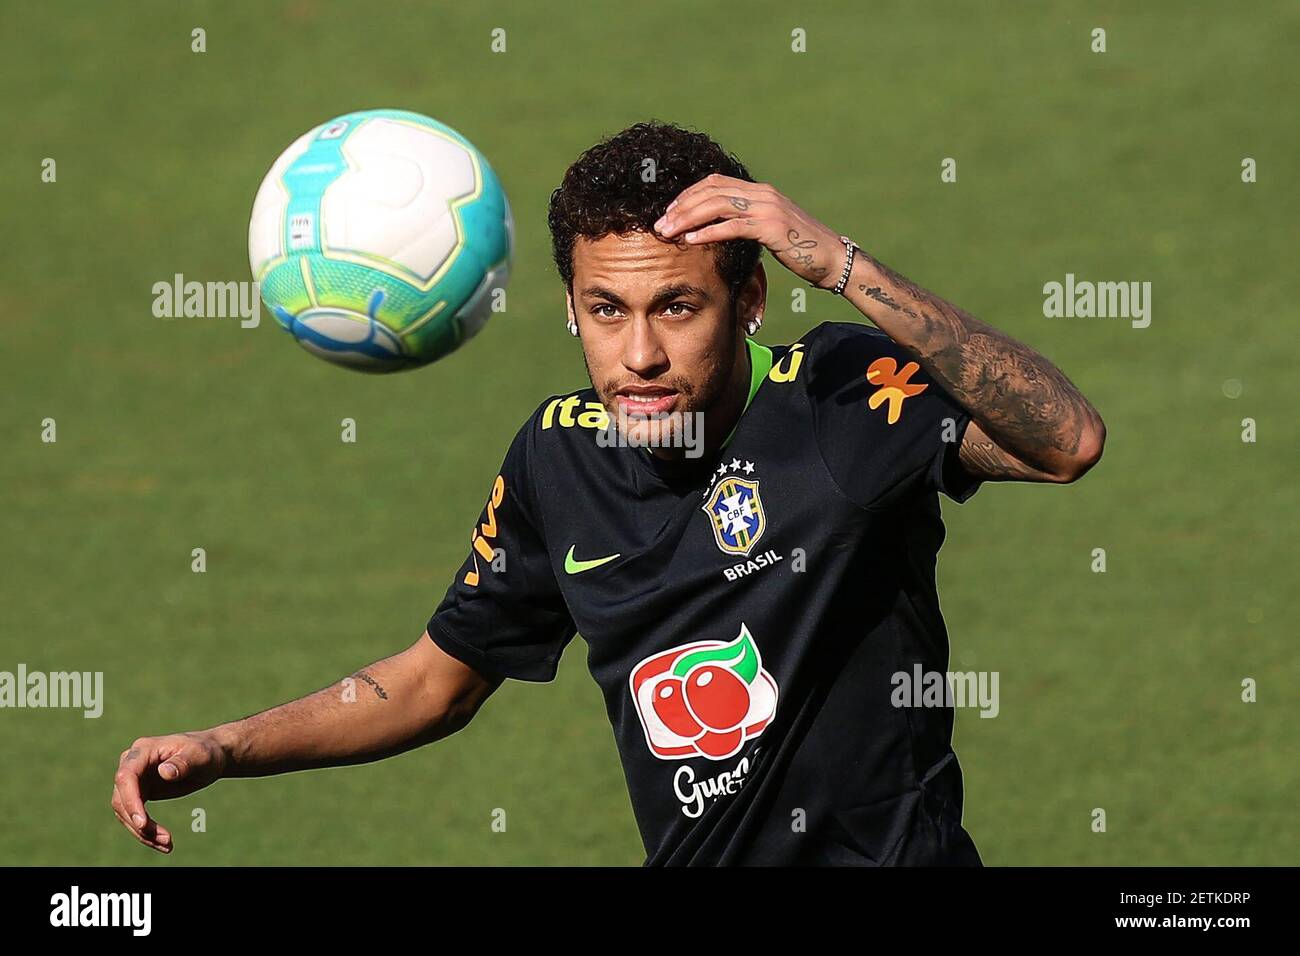 170322) -- SAO PAULO, March 22, 2017 (Xinhua) -- Player Neymar